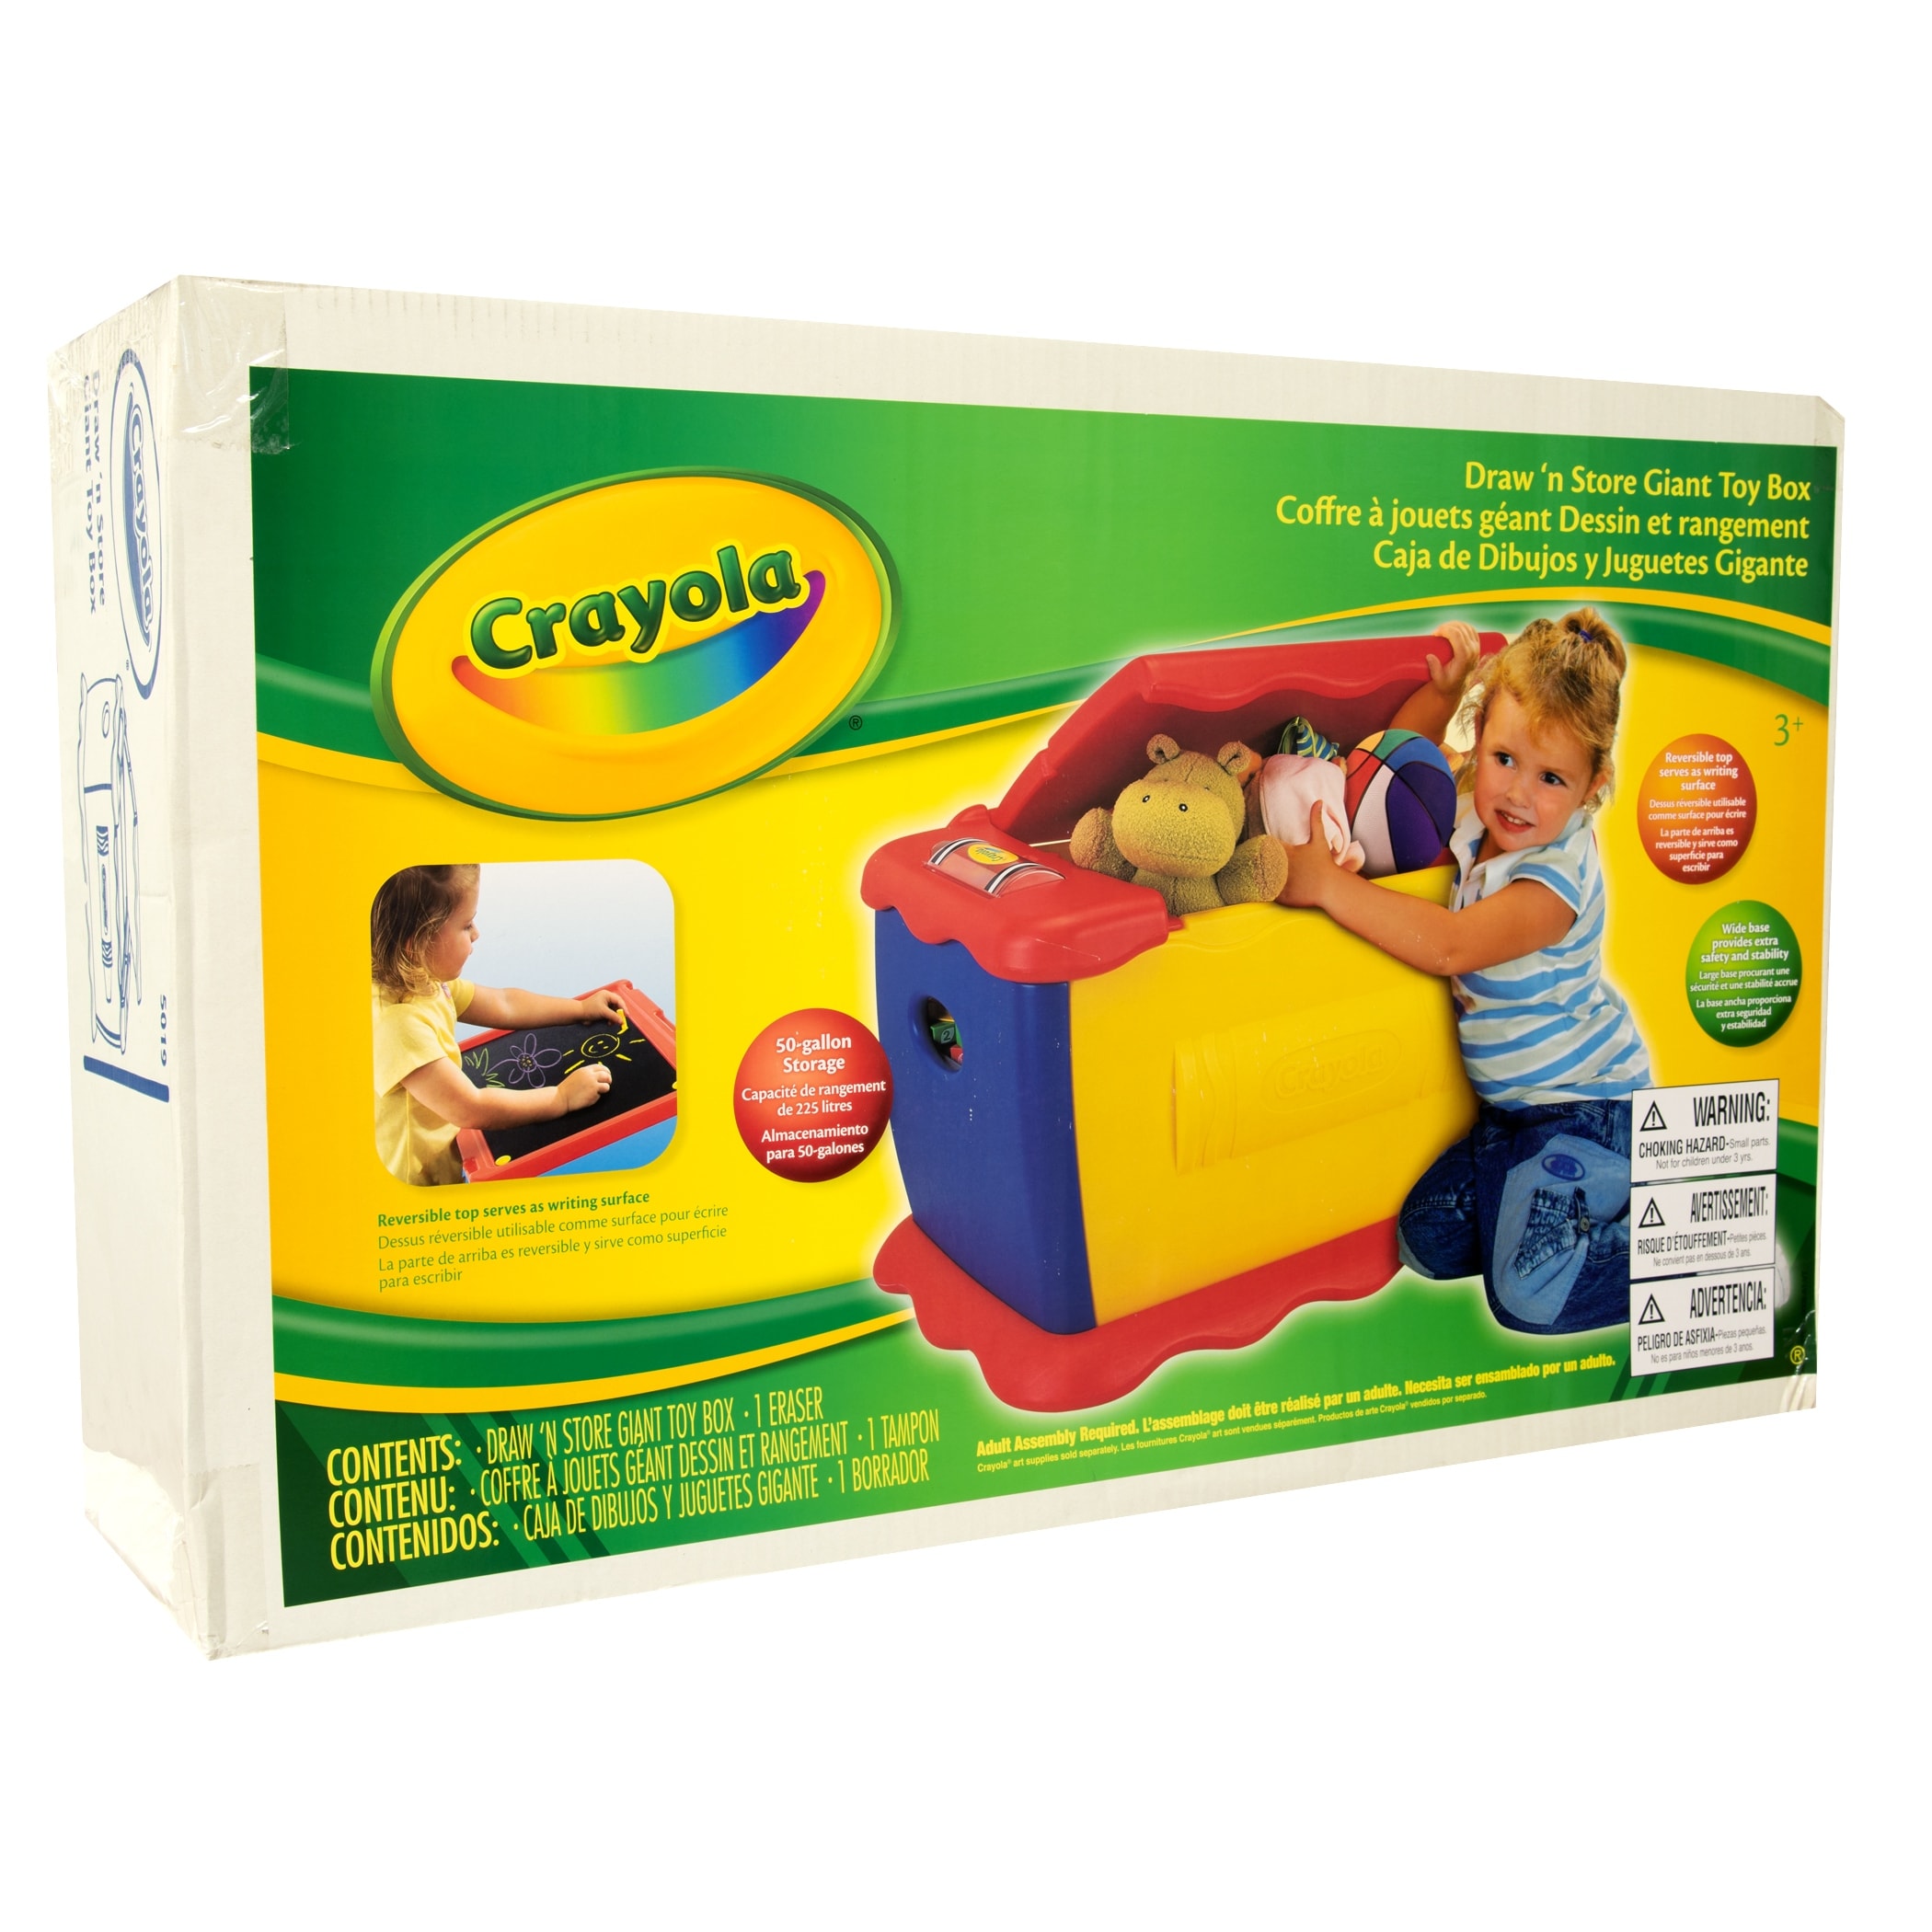 crayola toy box b&m